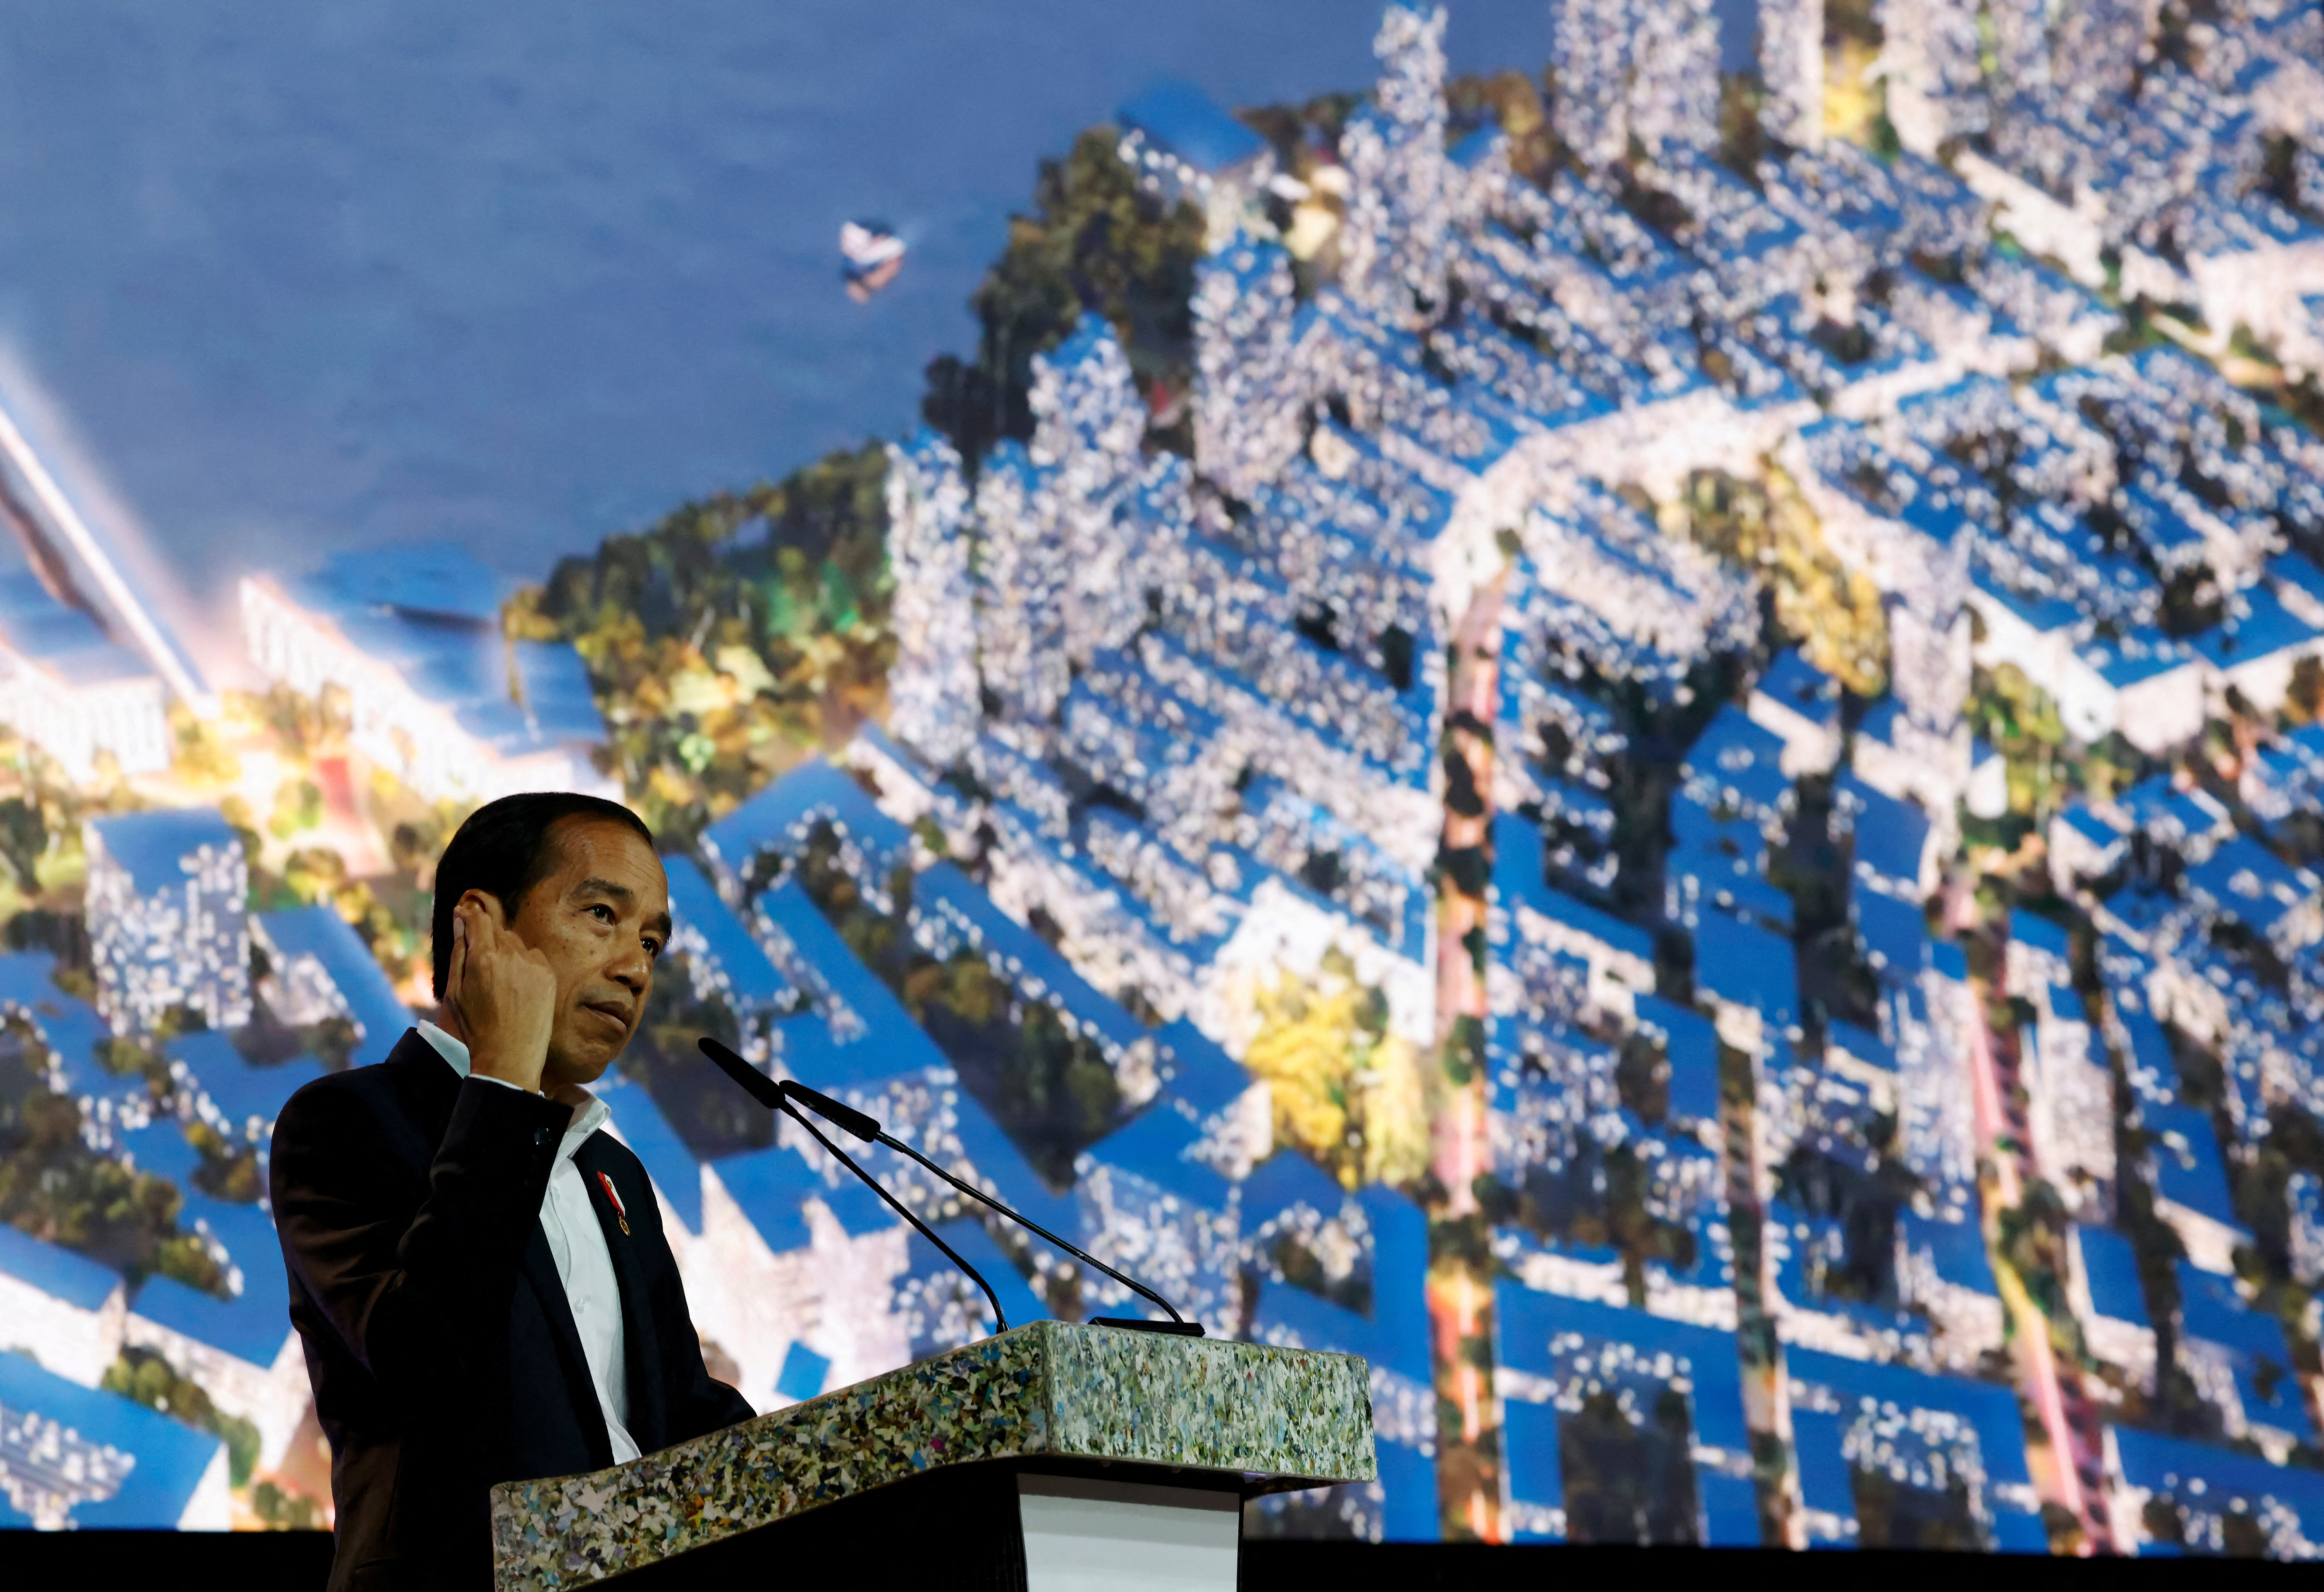 Indonesia's President Joko Widodo speaks about the planned new capital Nusantara, at Ecosperity Week in Singapore